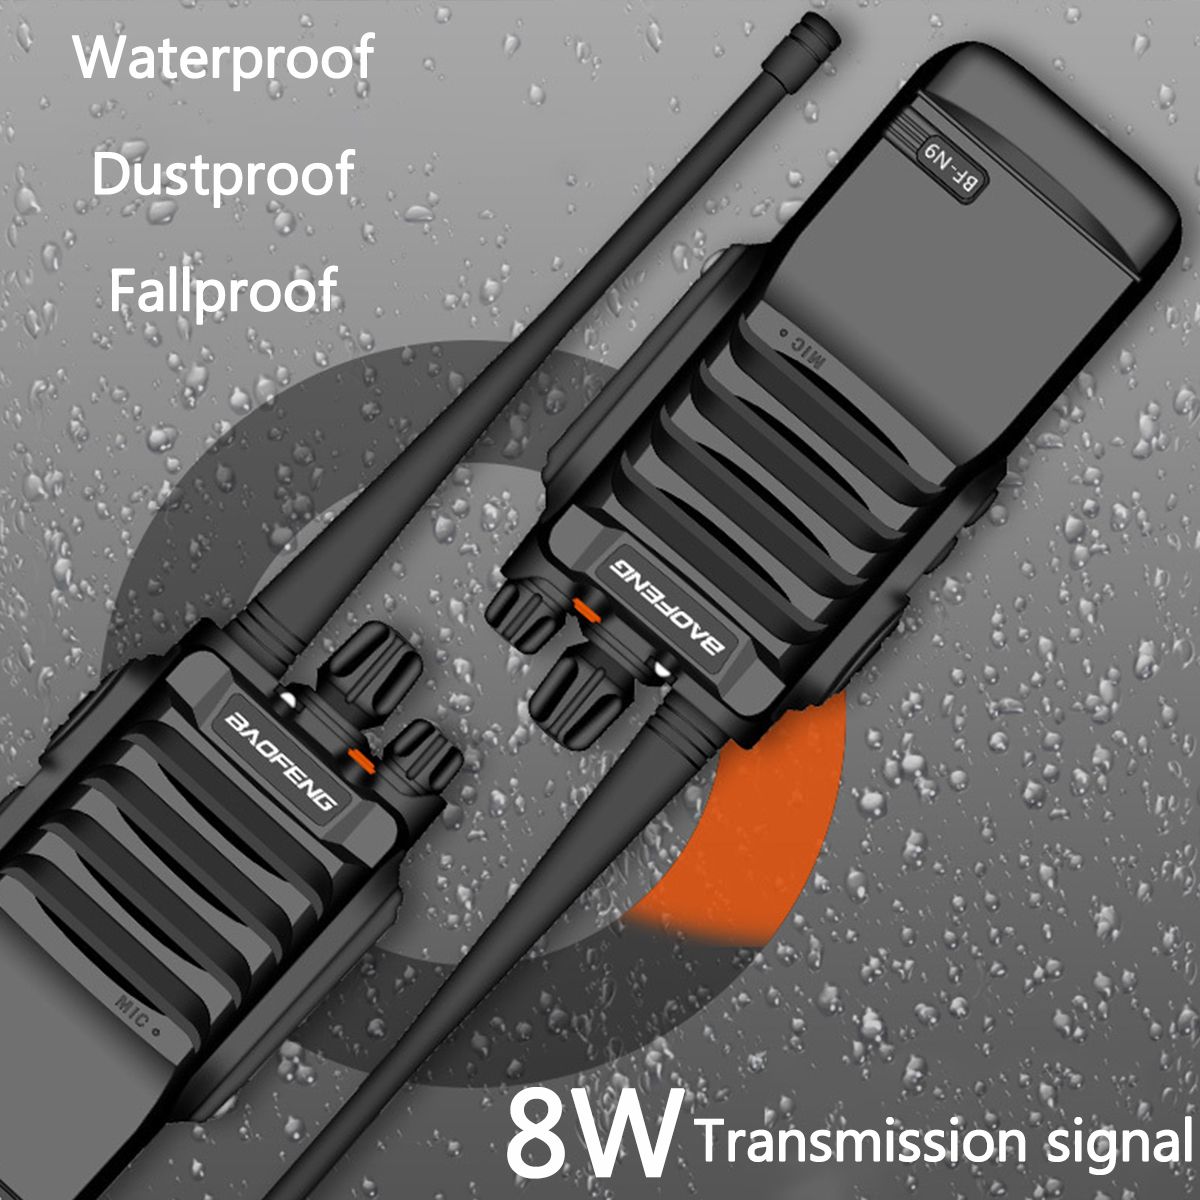 Baofeng-BF-N9-8W-IP67-Waterproof-Walkie-Talkie-FM-Radio-UHF-400-520MHz-Two-Way-Radio-15KM-Communicat-1420913